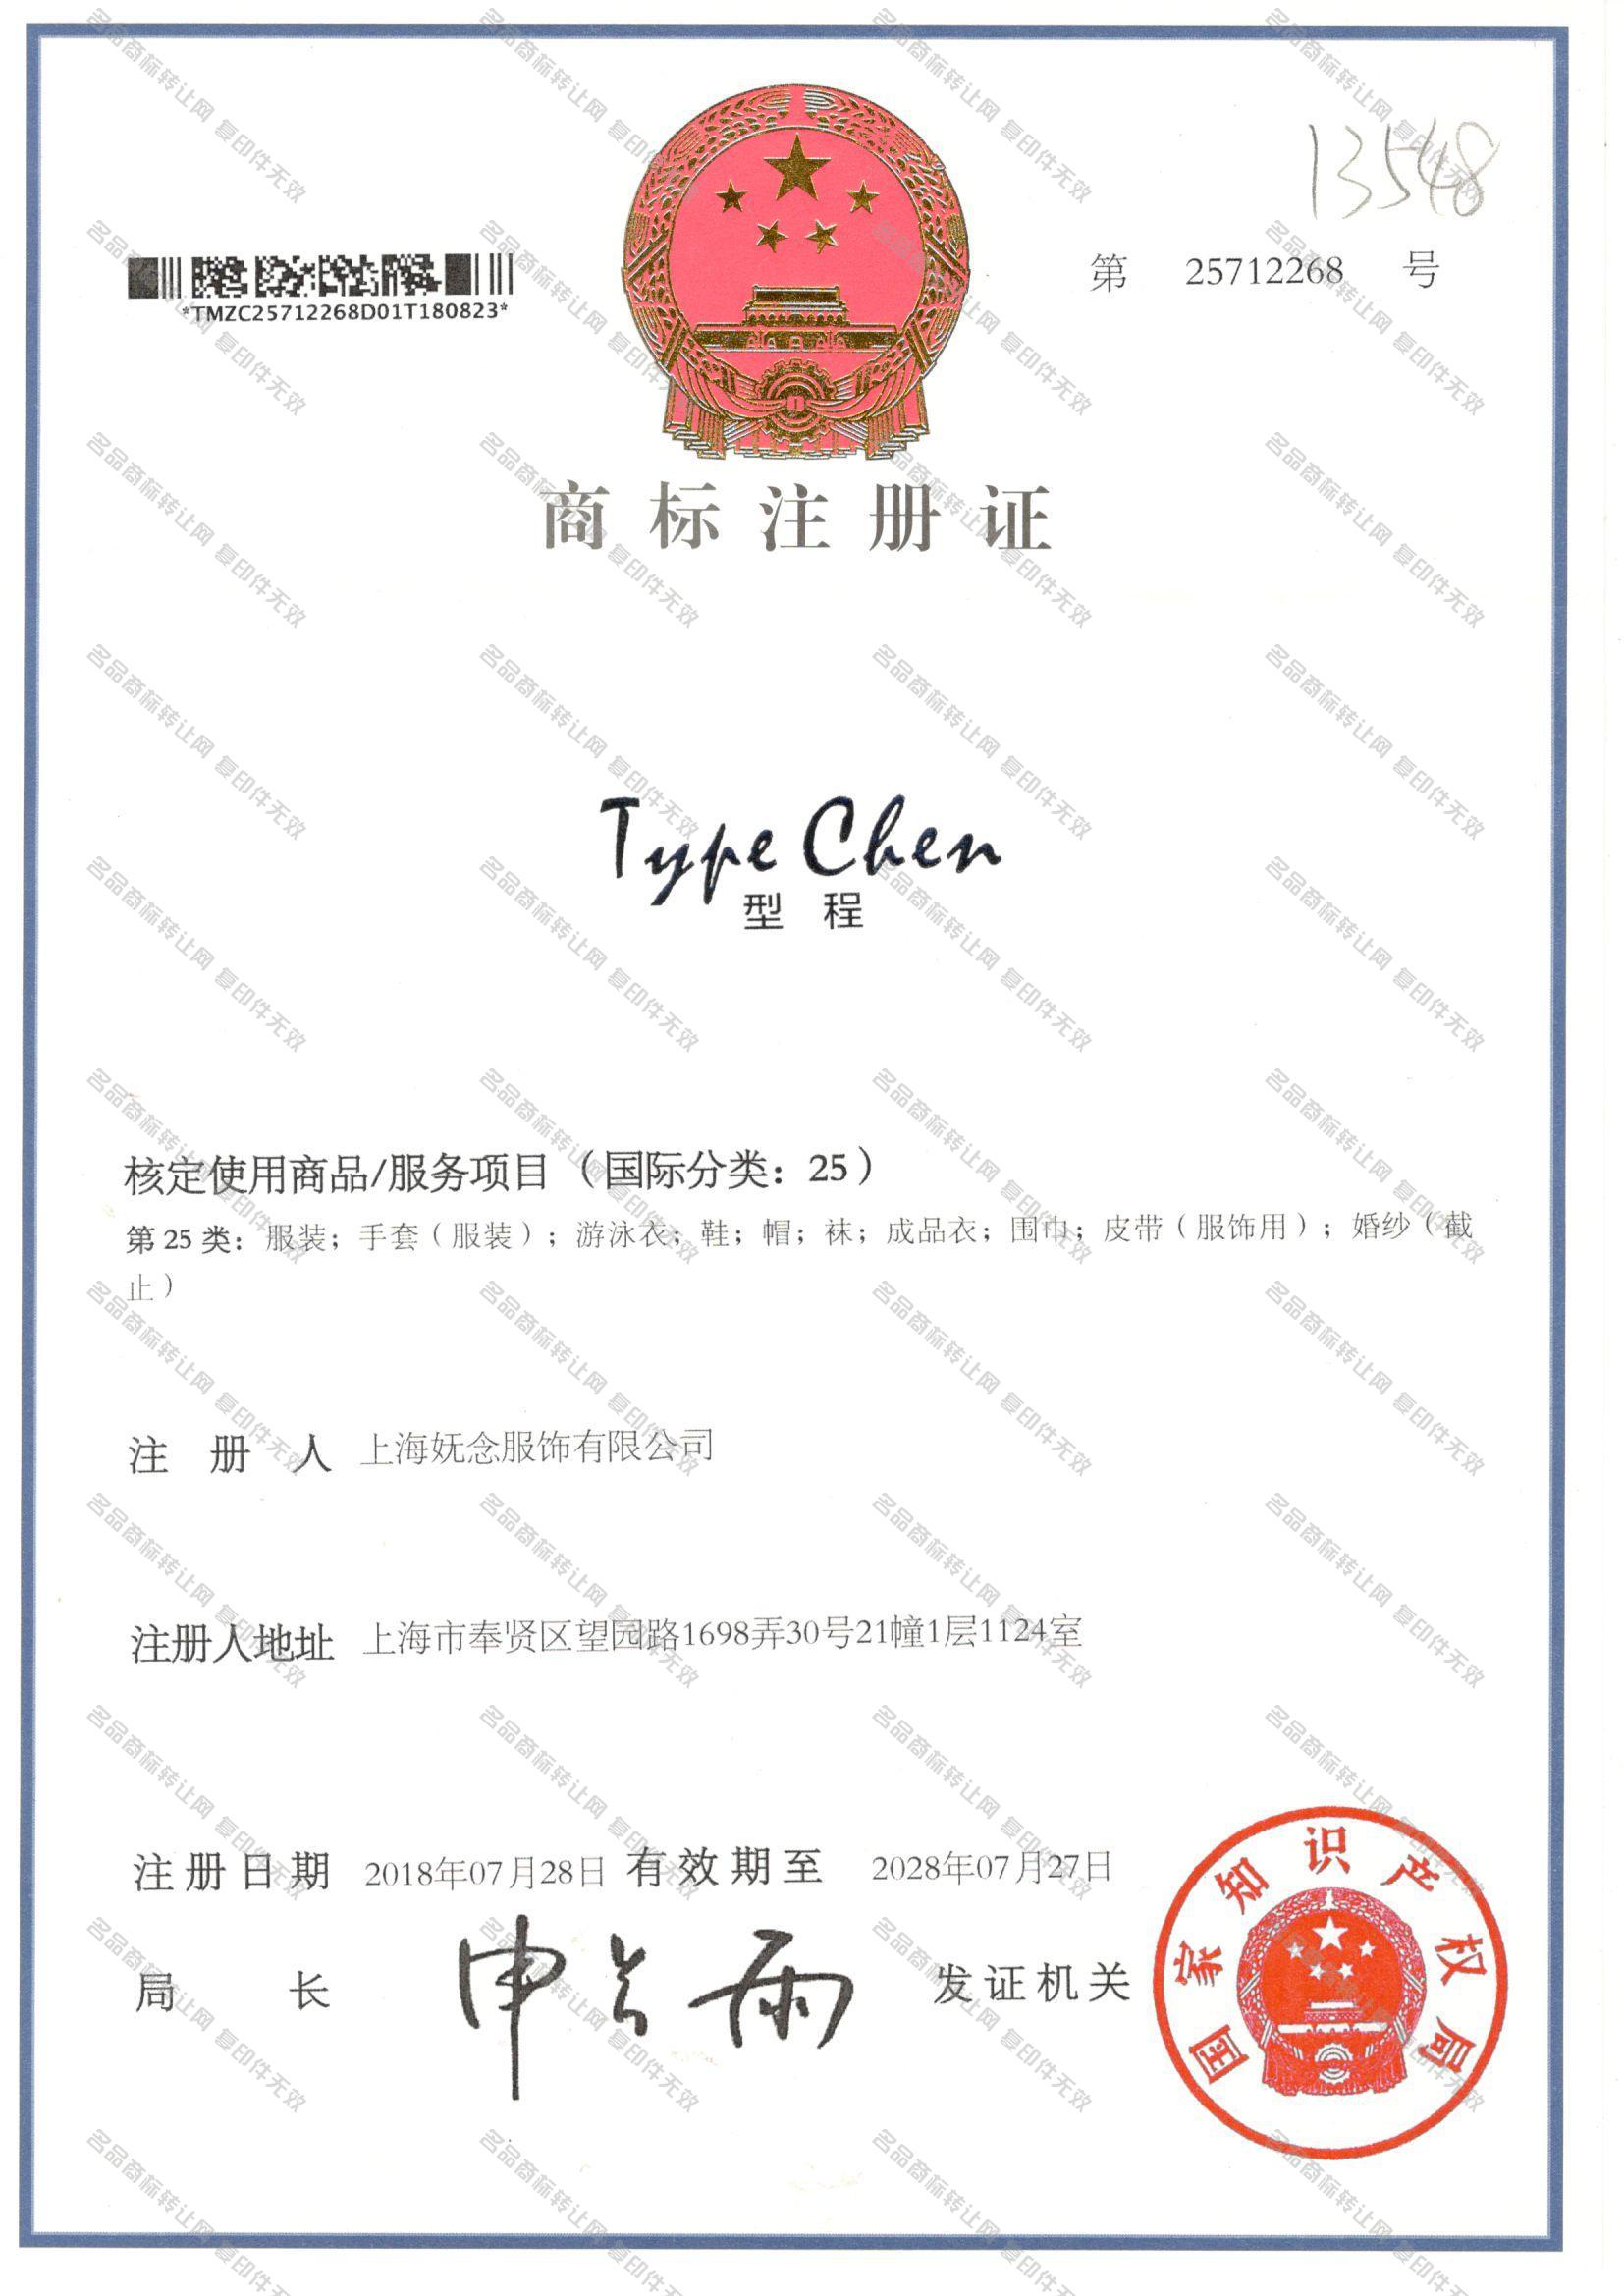 型程,TYPE CHEN注册证